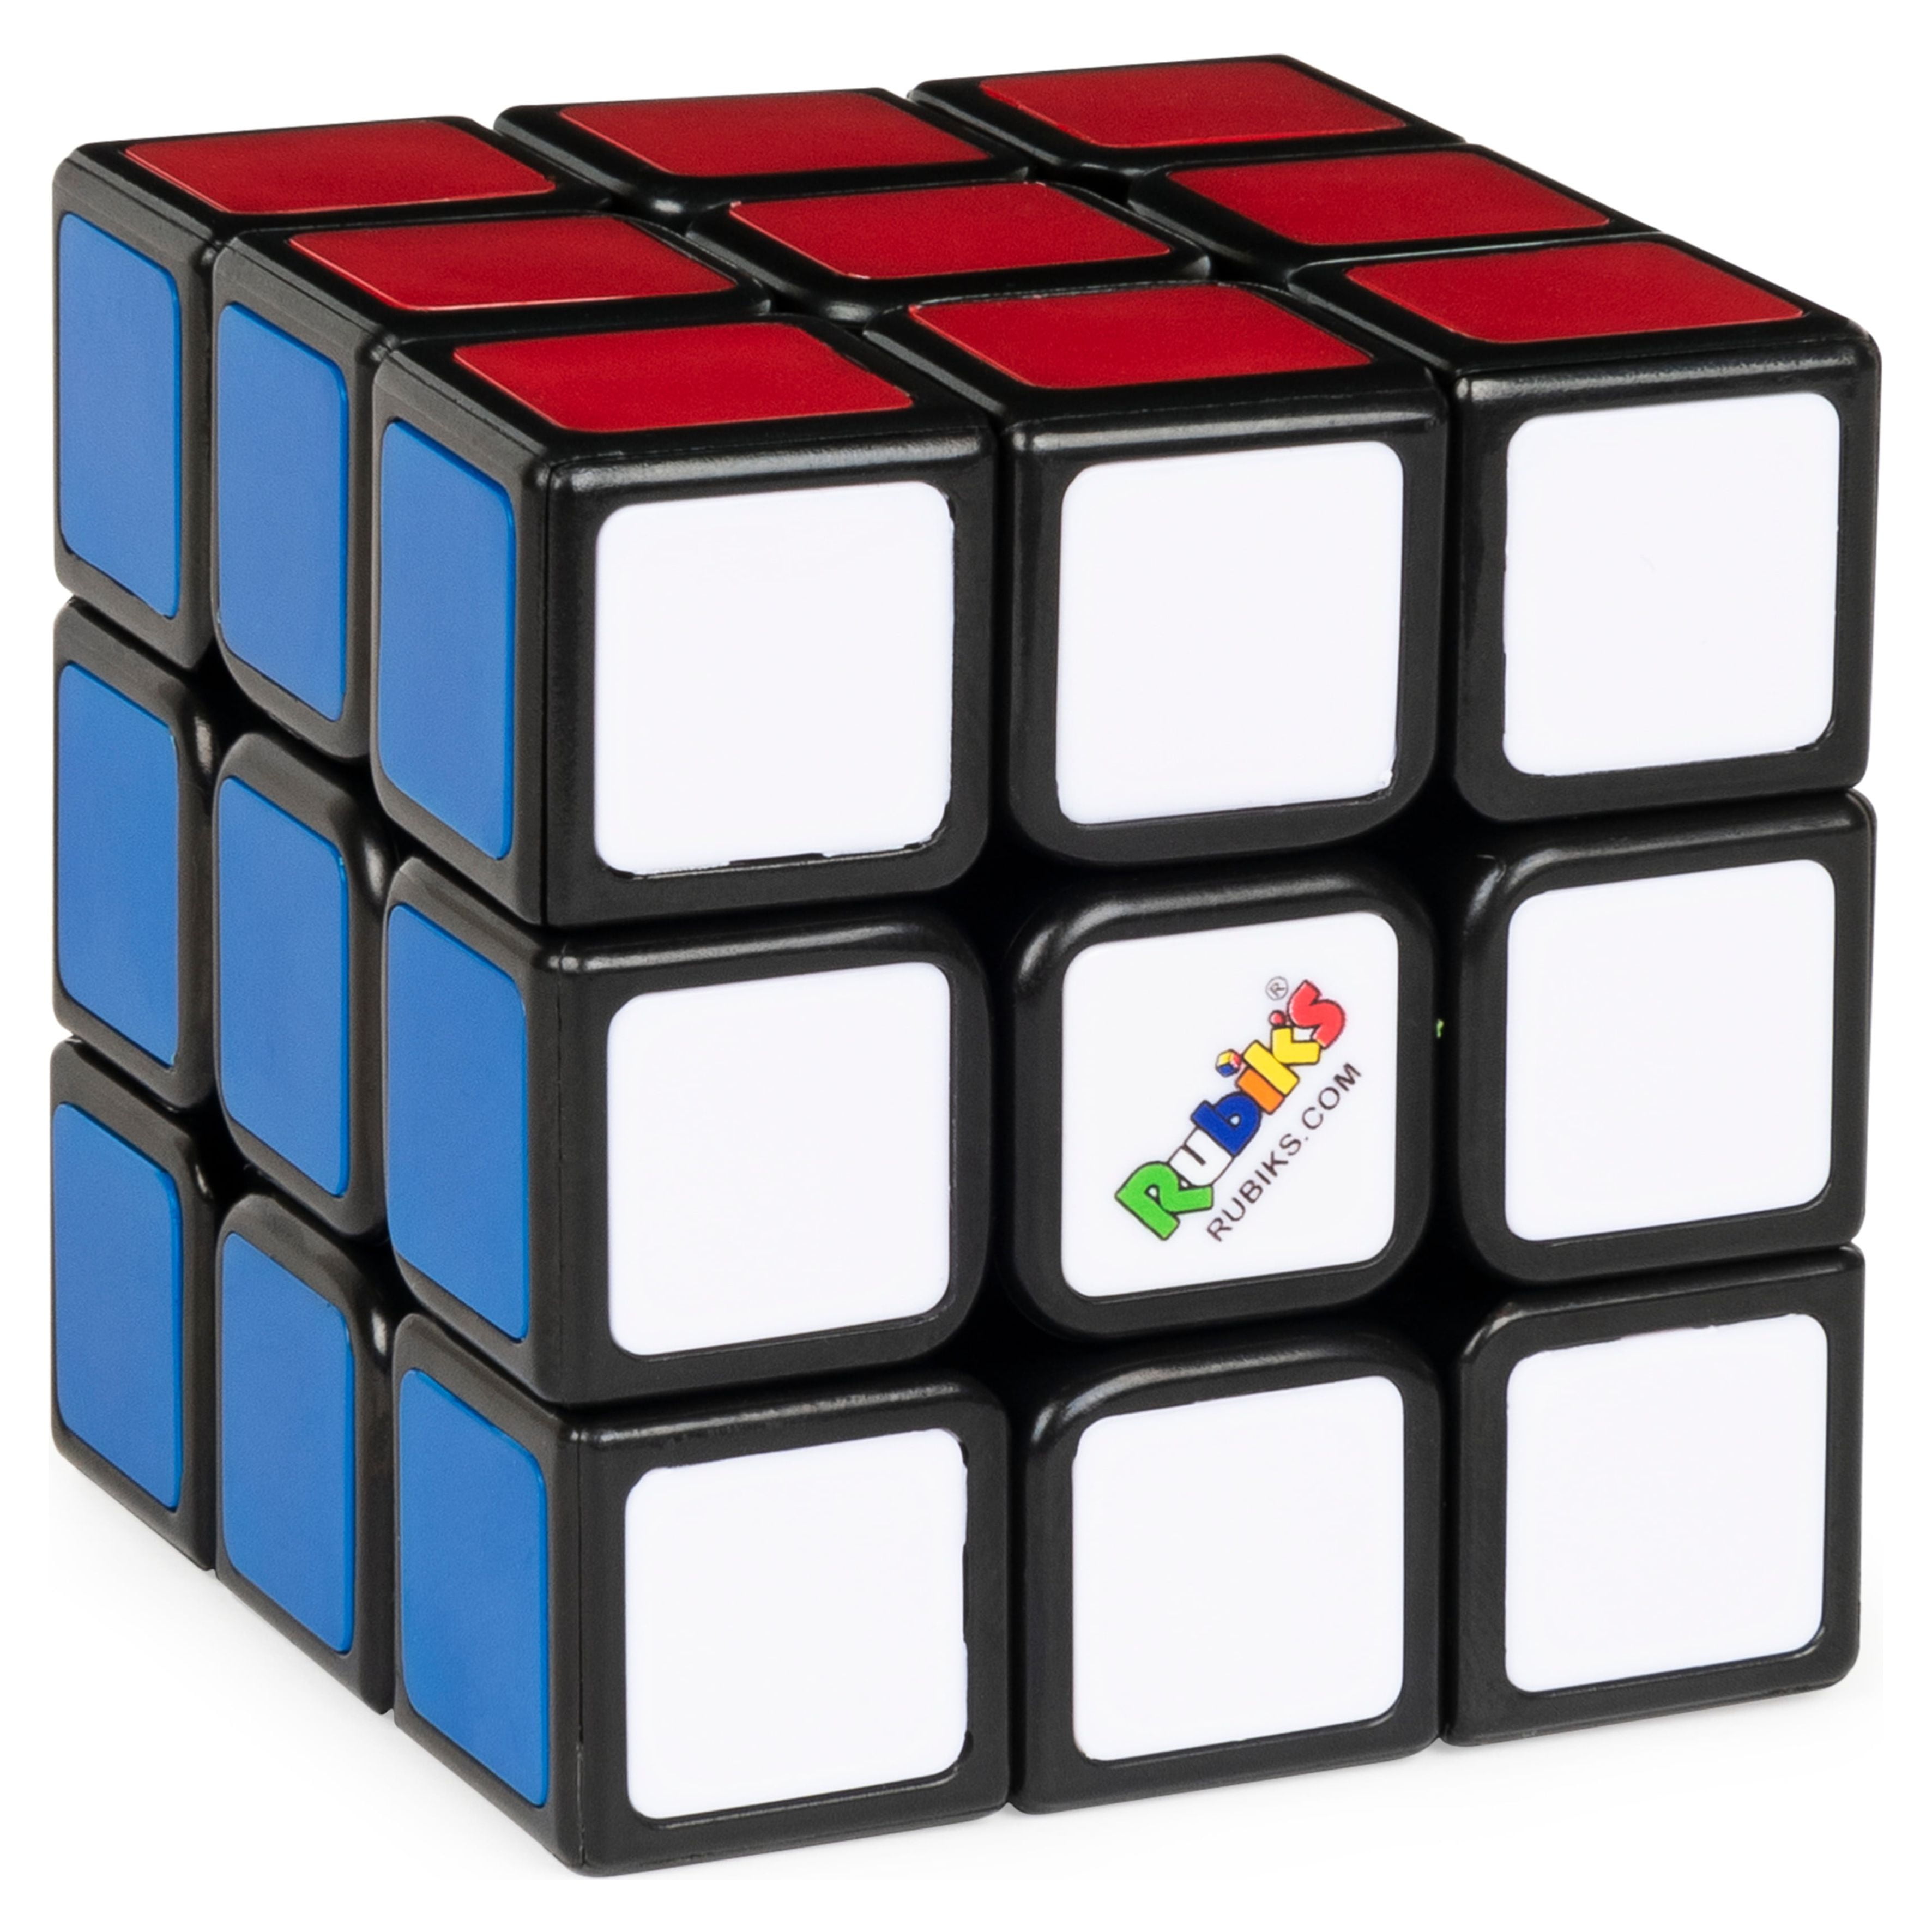 Rubik’s Cube, The Original 3x3 Color-Matching Puzzle $9.03